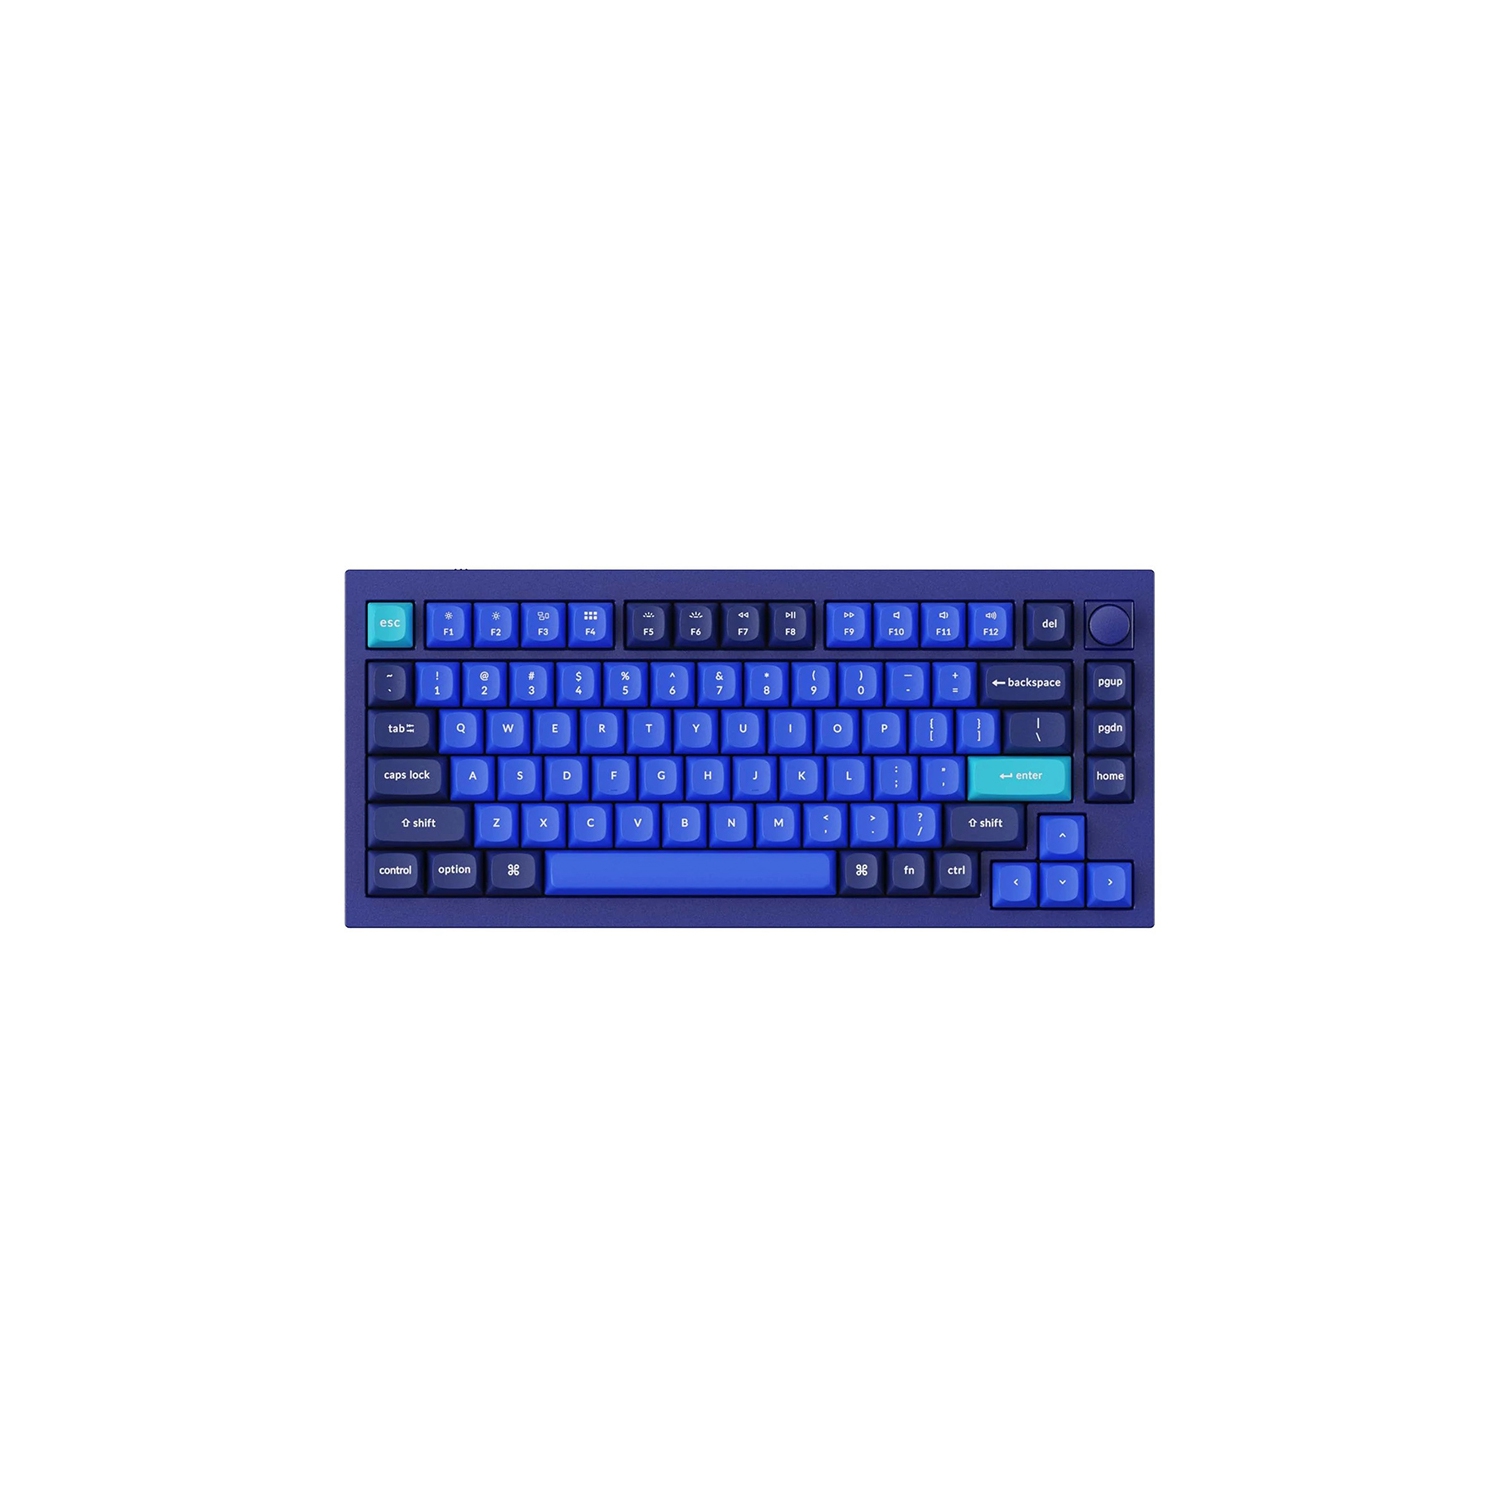 Keychron Q1 V2 Hotswap Mechanica Keyboard - RGB -Aluminum Frame - Blue - with Knob - Gateron Pro Red - 75% Layout - Windows Mac OS (Q1-O1)